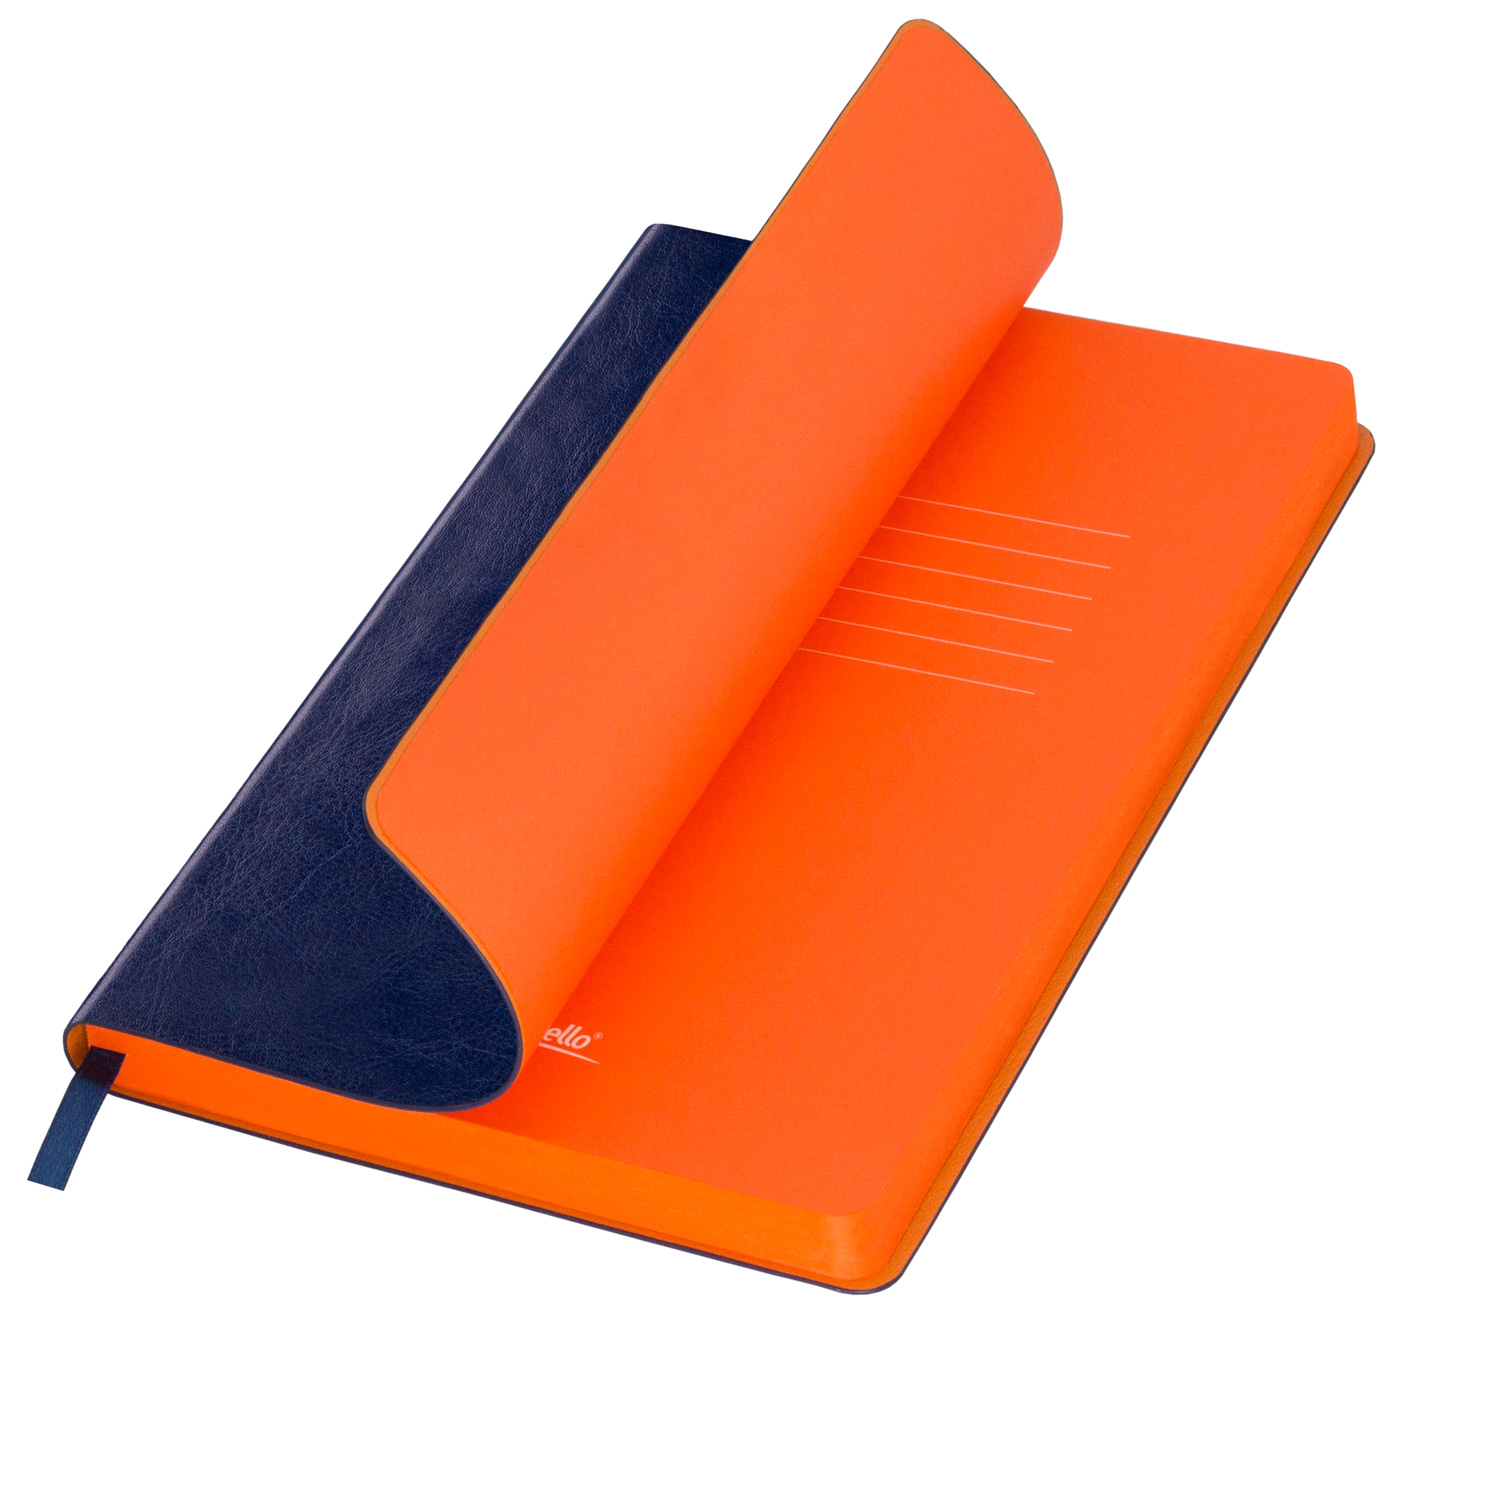 Артикул: A15256.030.1 — Ежедневник Portobello Trend, River side, недатированный, синий/оранжевый (без упаковки, без стикера)